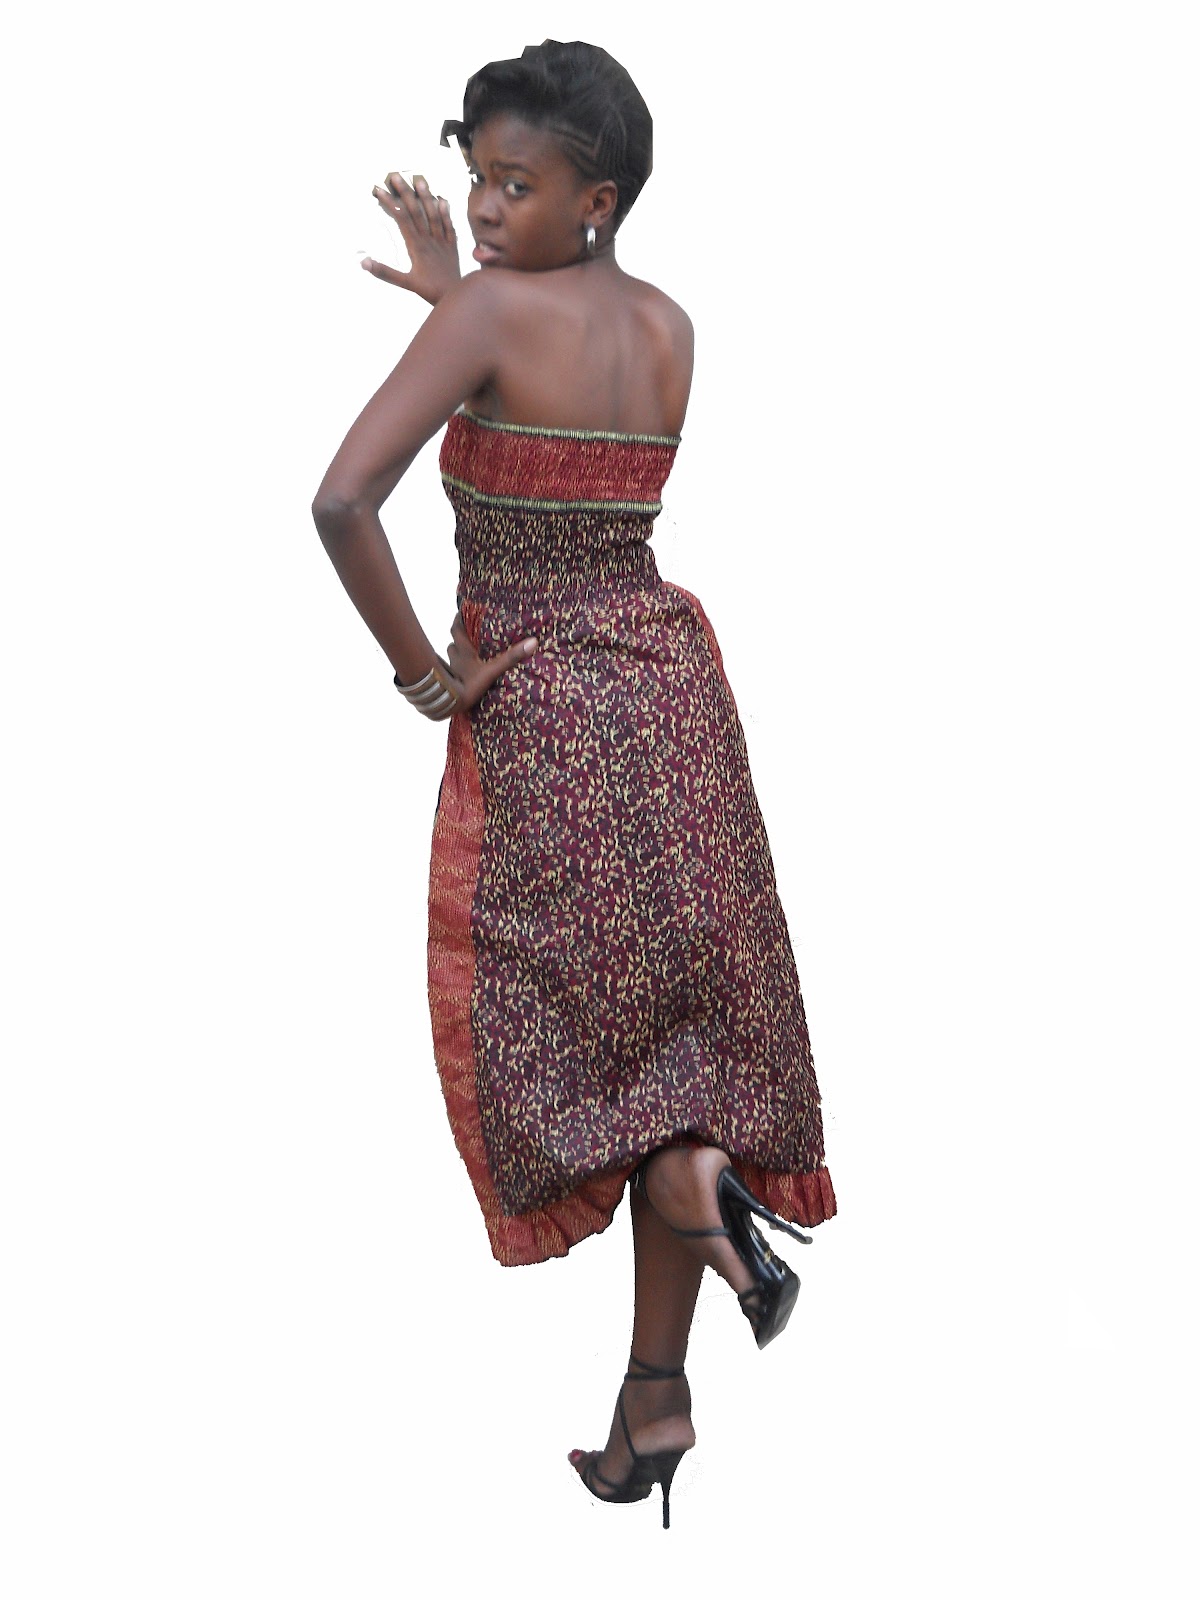 RINEEZ ARTS - African Print Outfits & Culture Stuffs: Leopard touch dress